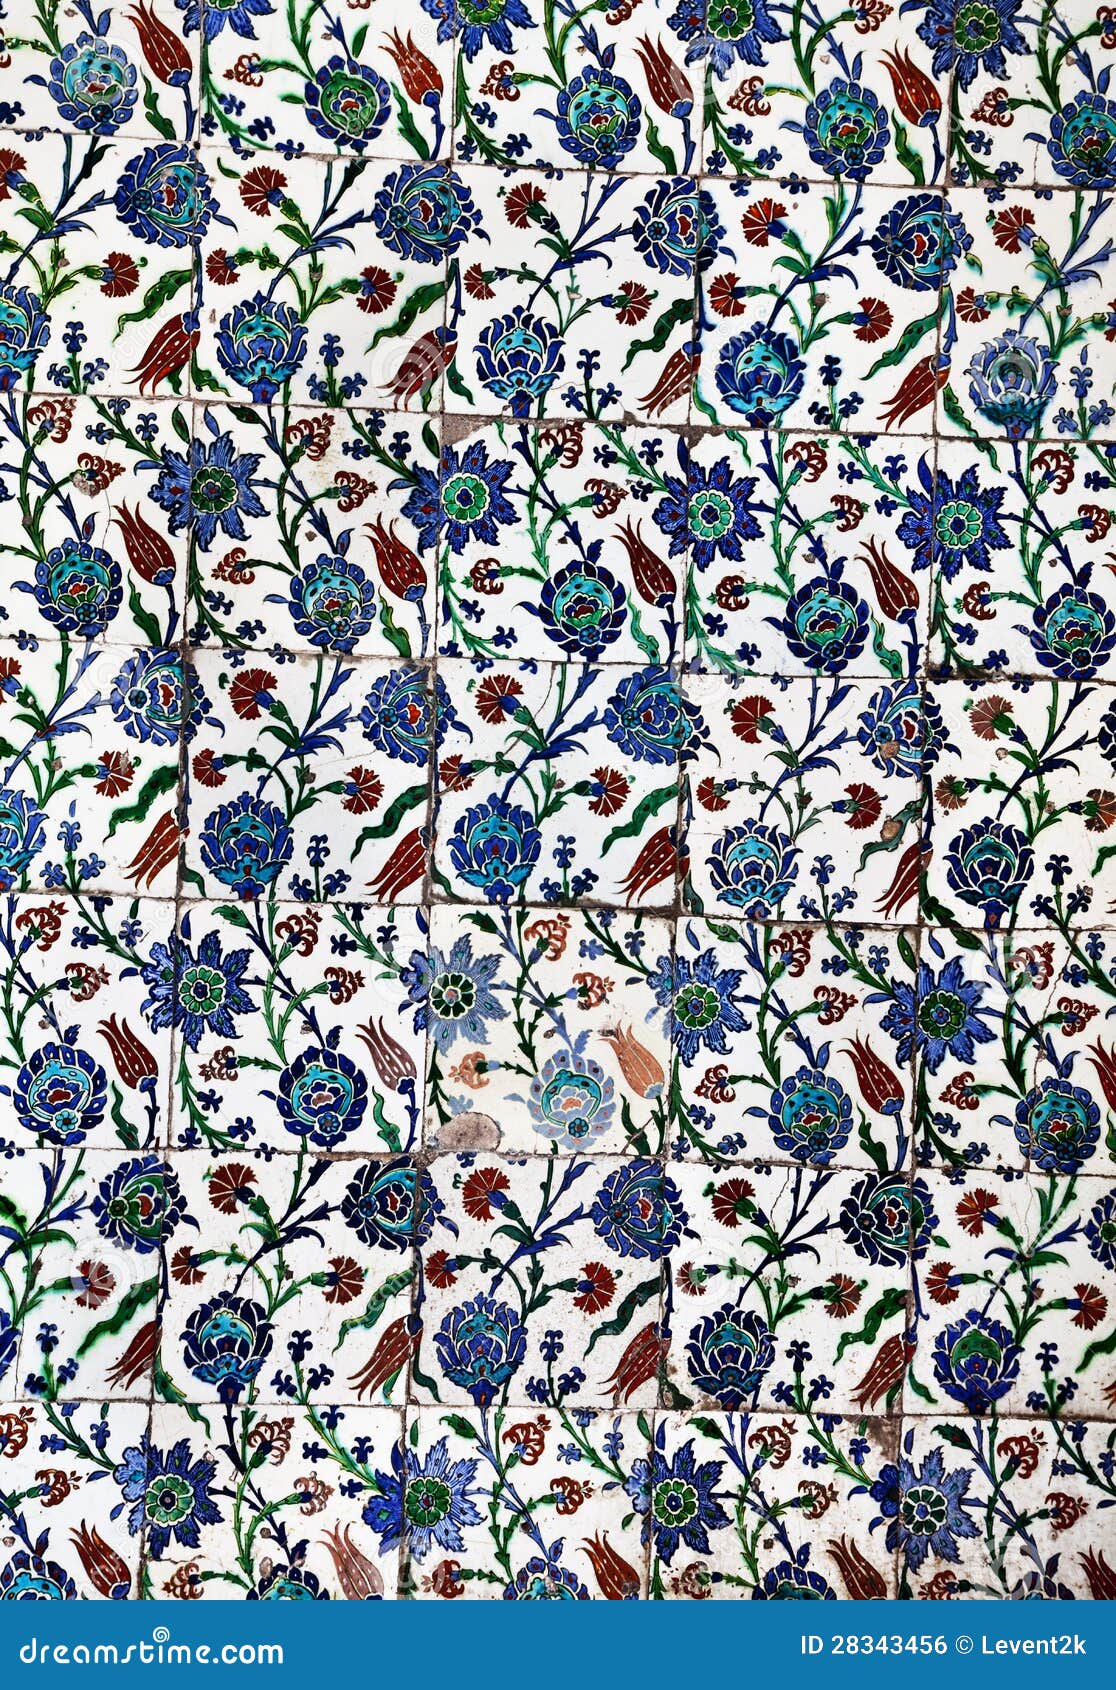 Sultanahmet Blue Mosque Interior Tiles Stock Photo Image